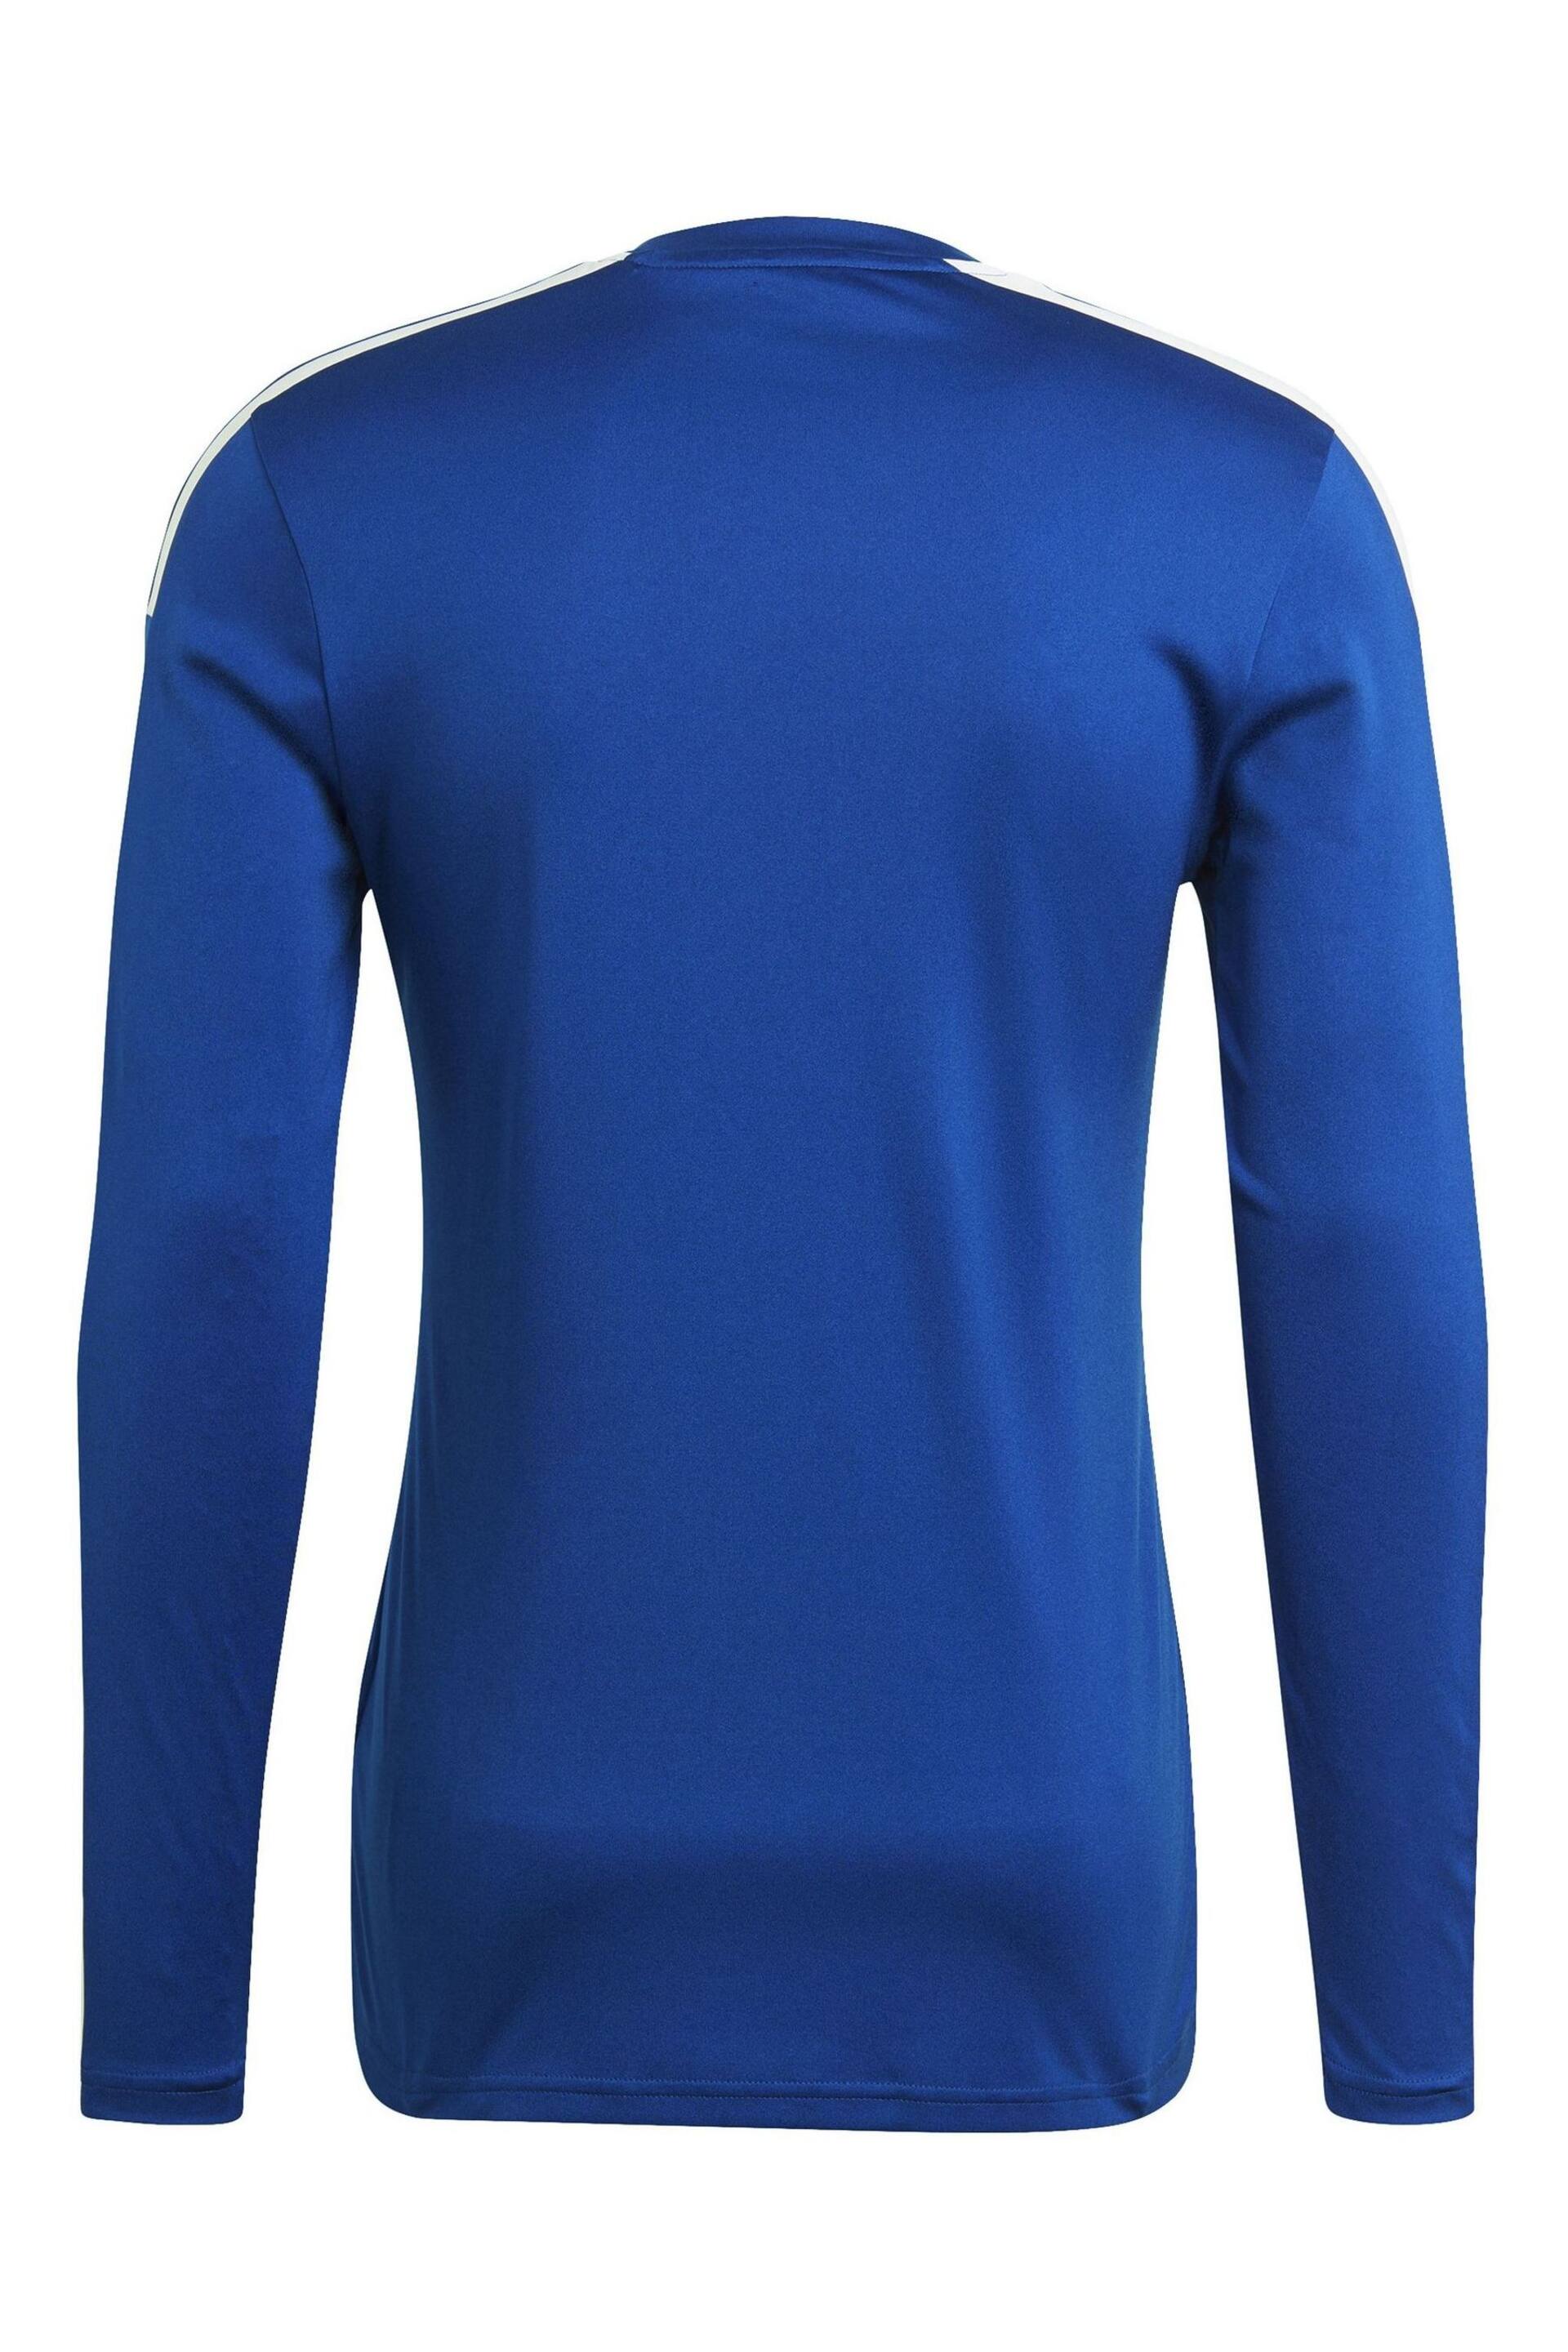 adidas Blue Football Squadra Long Sleeve T-Shirt - Image 7 of 7